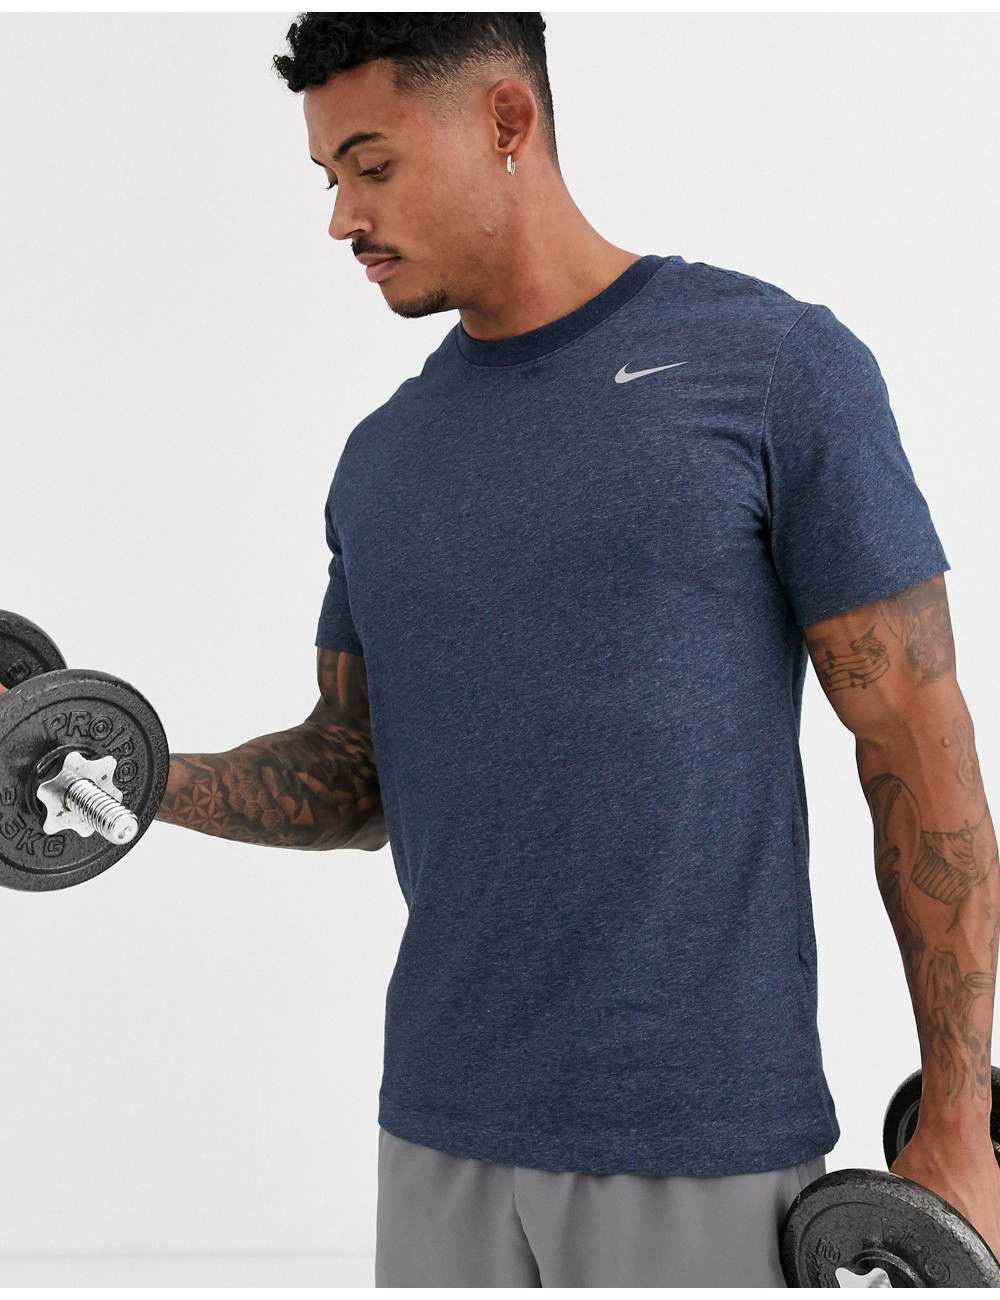 Nike Training t-shirt in navy